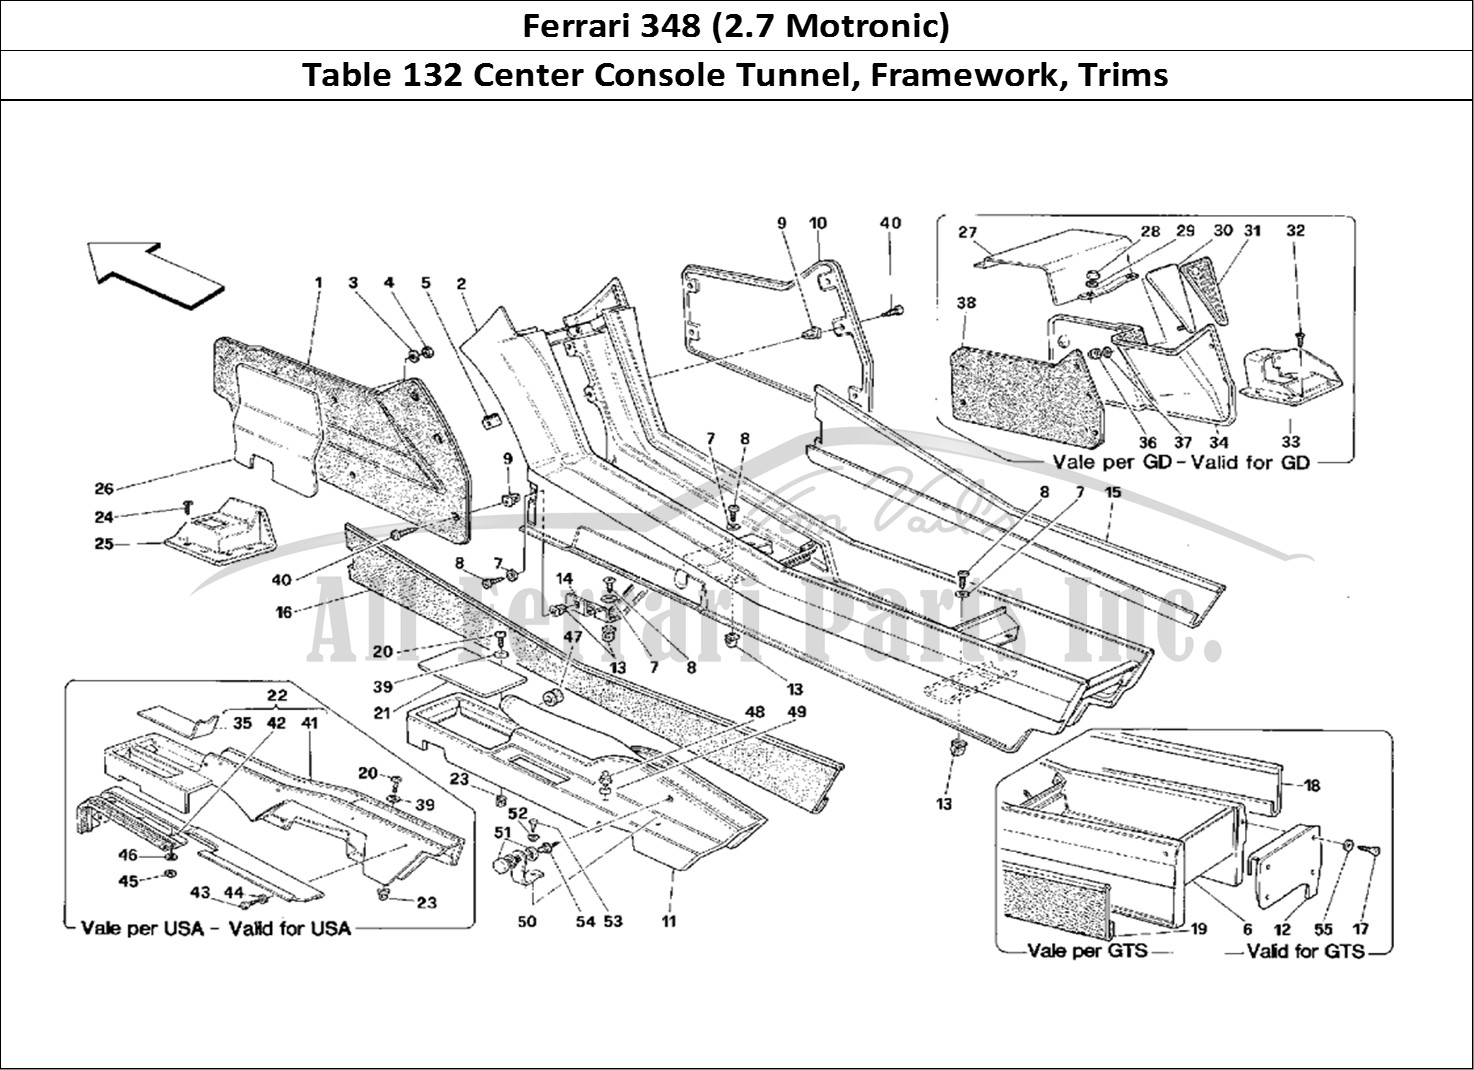 Ferrari Parts Ferrari 348 (2.7 Motronic) Page 132 Tunnel - Framework and Tr